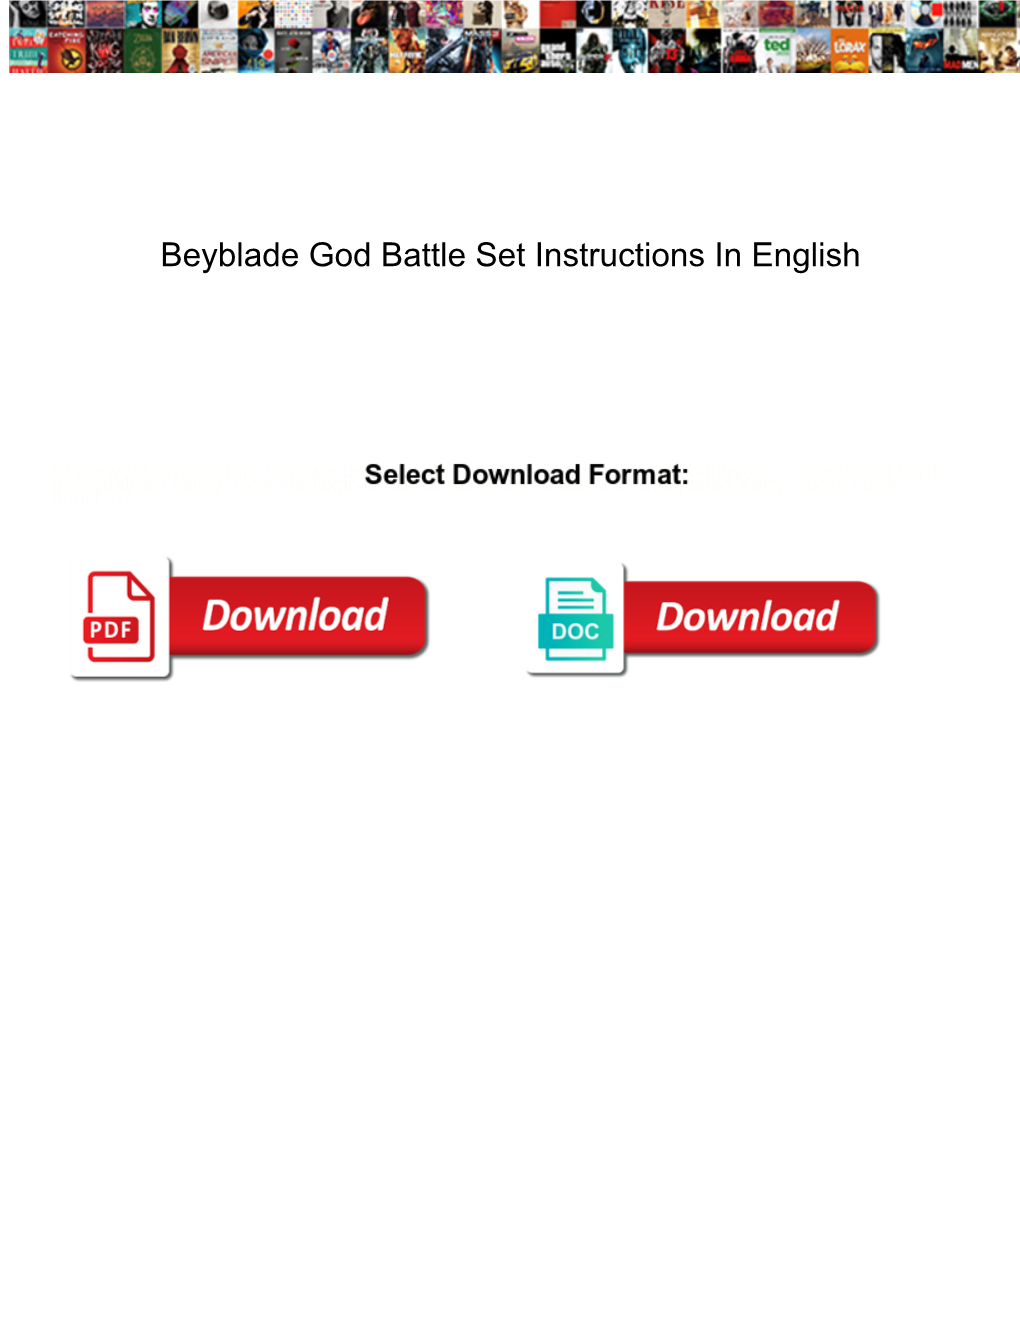 Beyblade God Battle Set Instructions in English